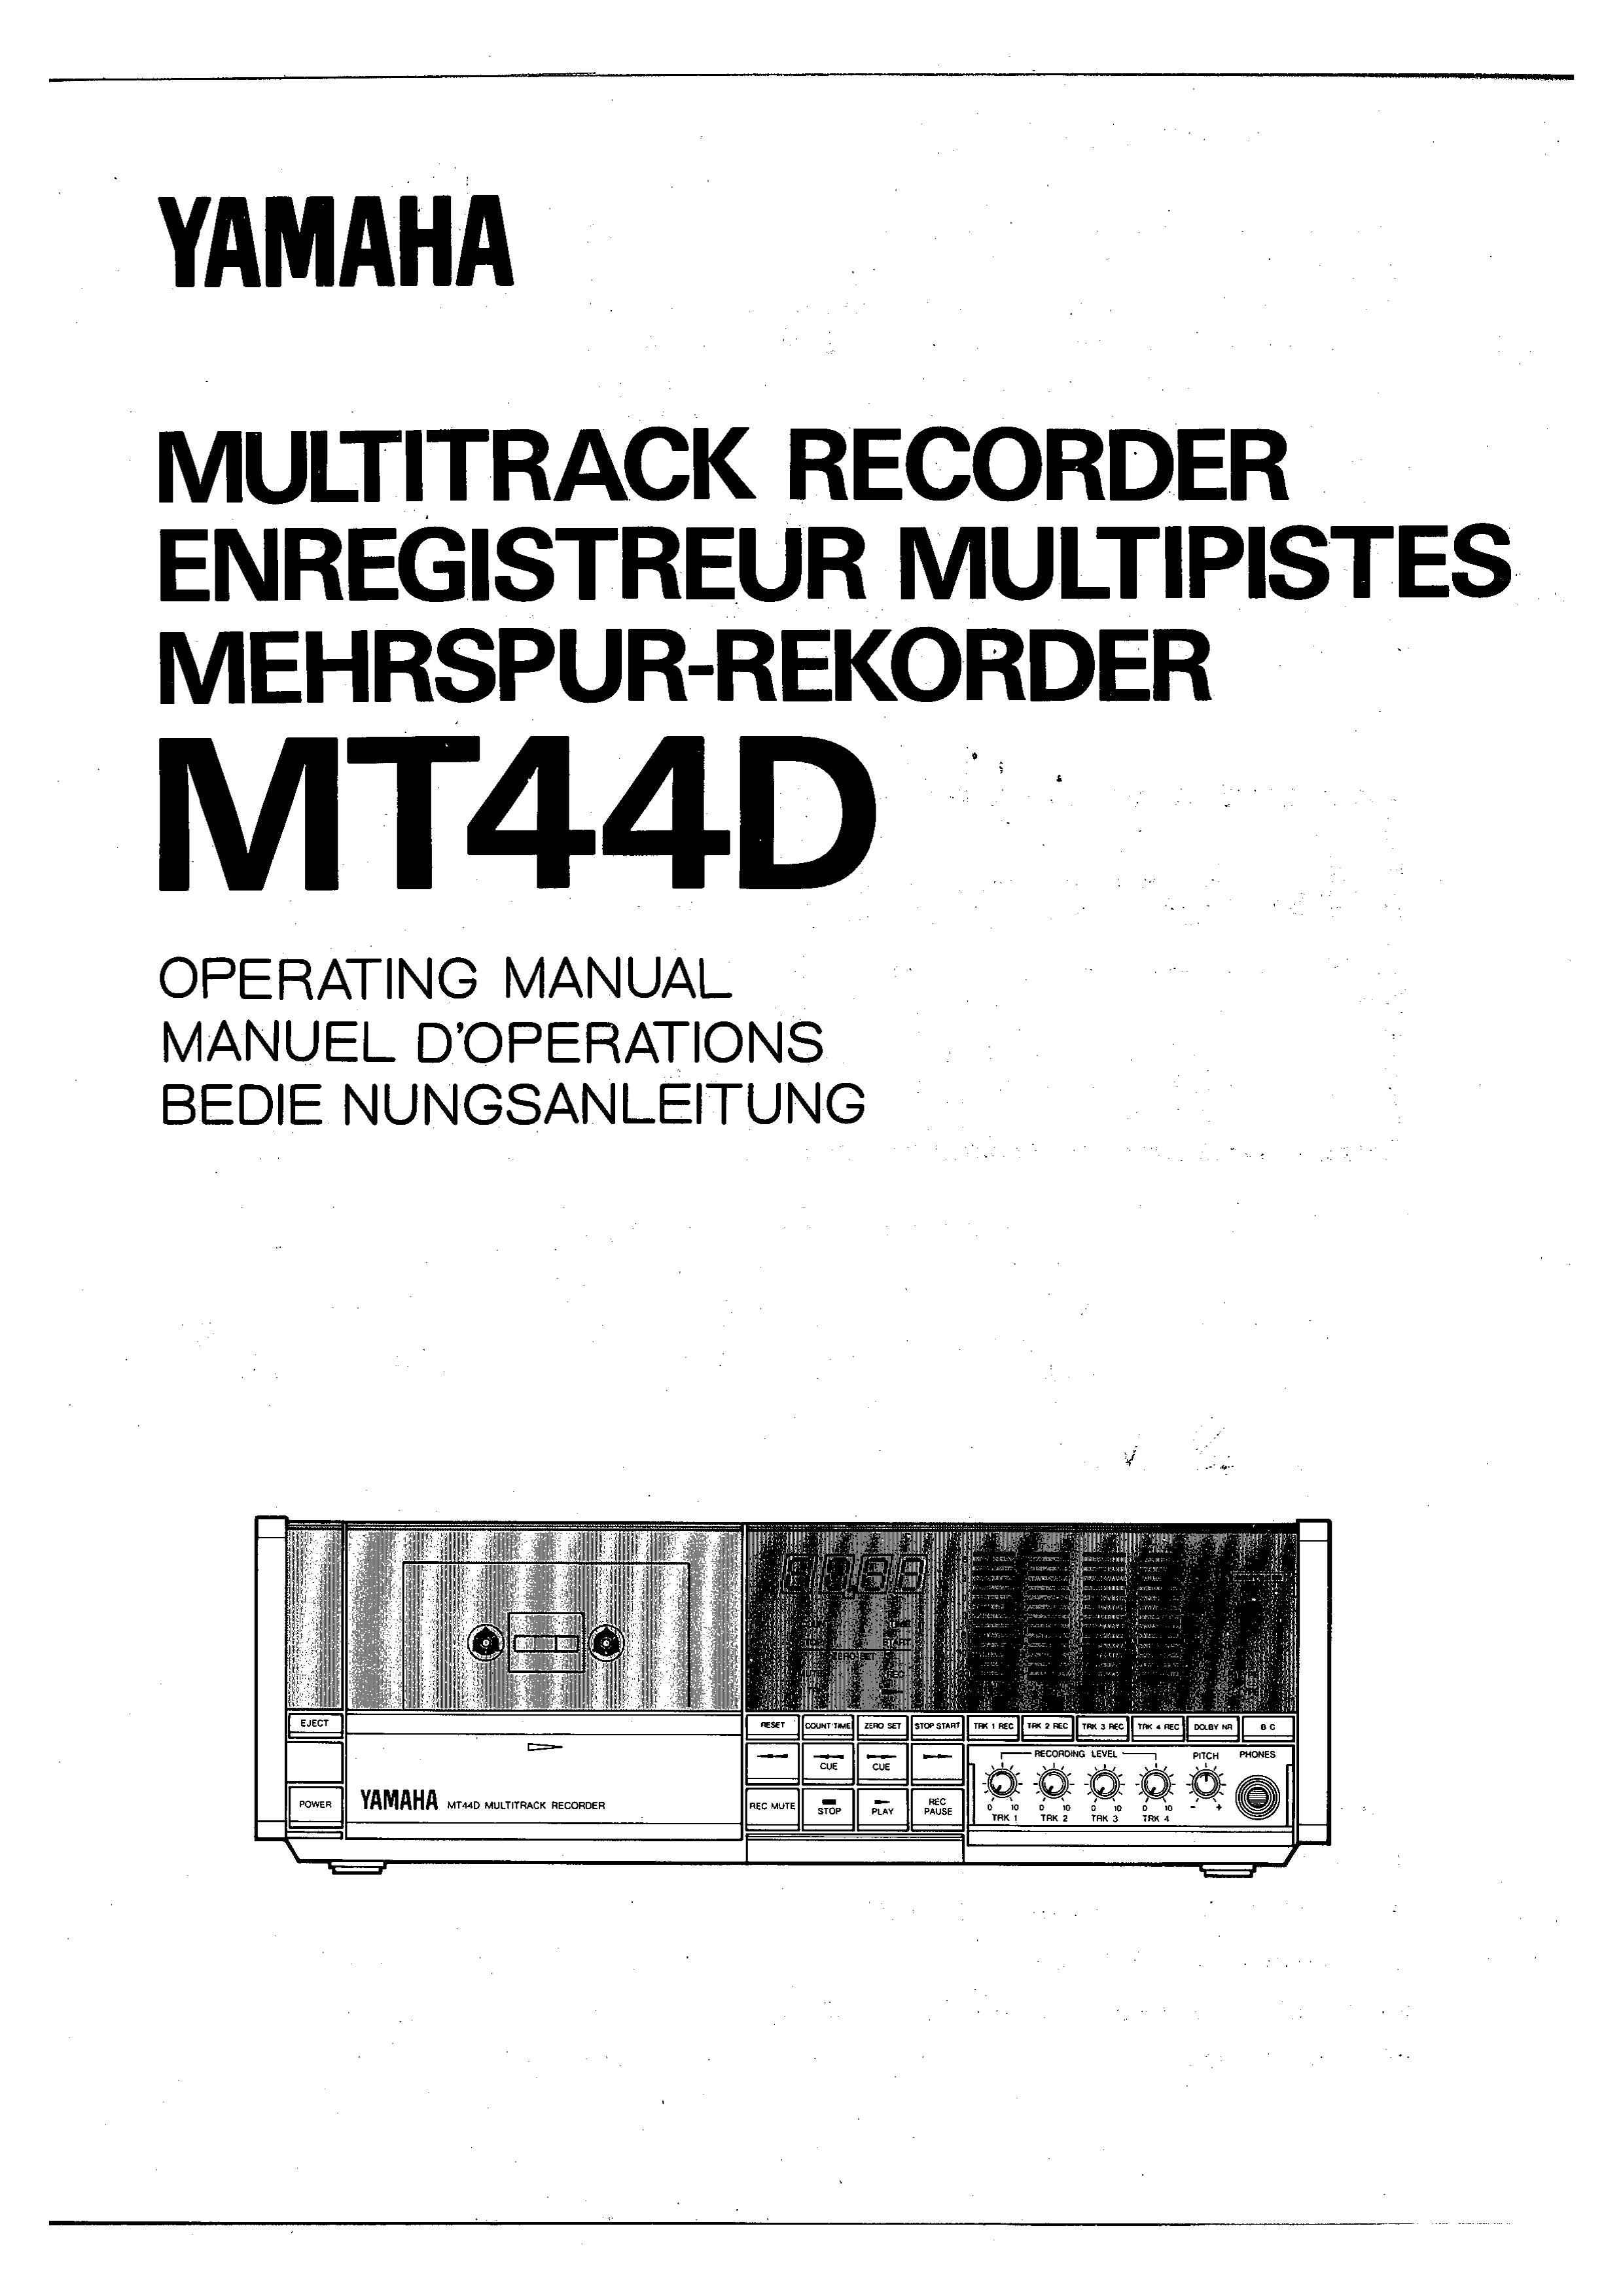 Yamaha MT44D Recording Equipment User Manual